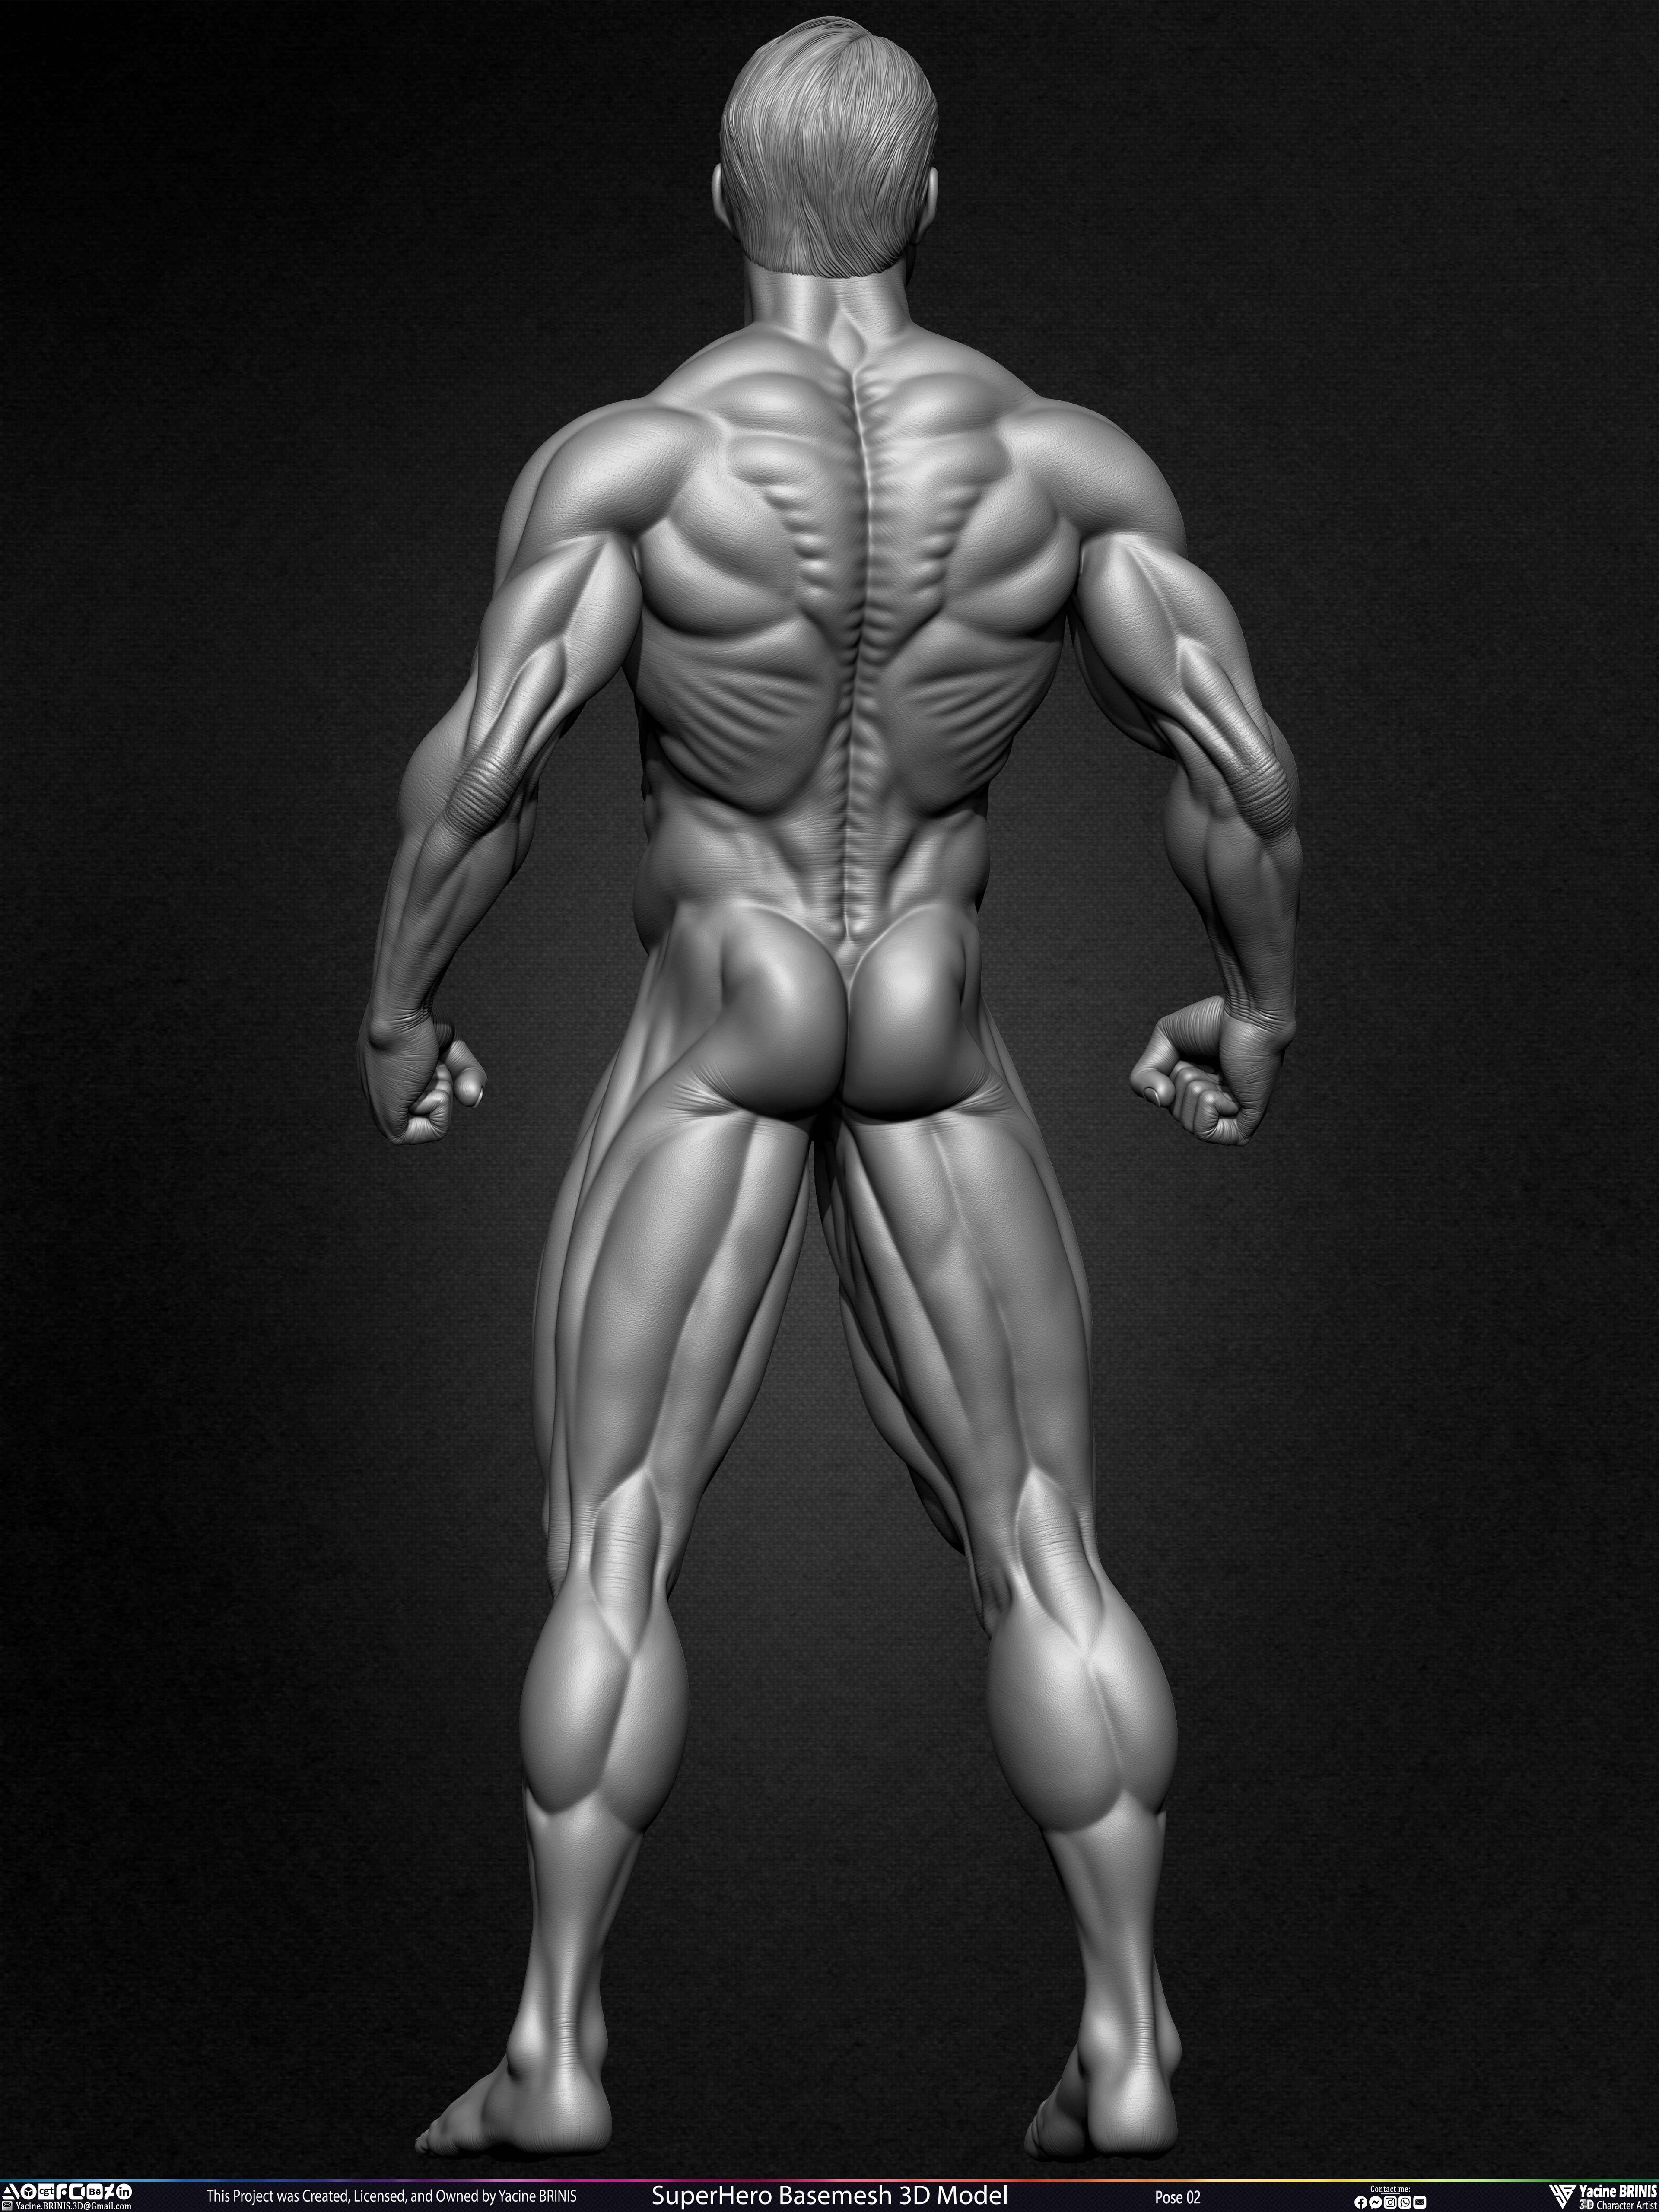 Super-Hero Basemesh 3D Model - Henry Cavill- Man of Steel - Superman - Pose 02 Sculpted by Yacine BRINIS Set 010